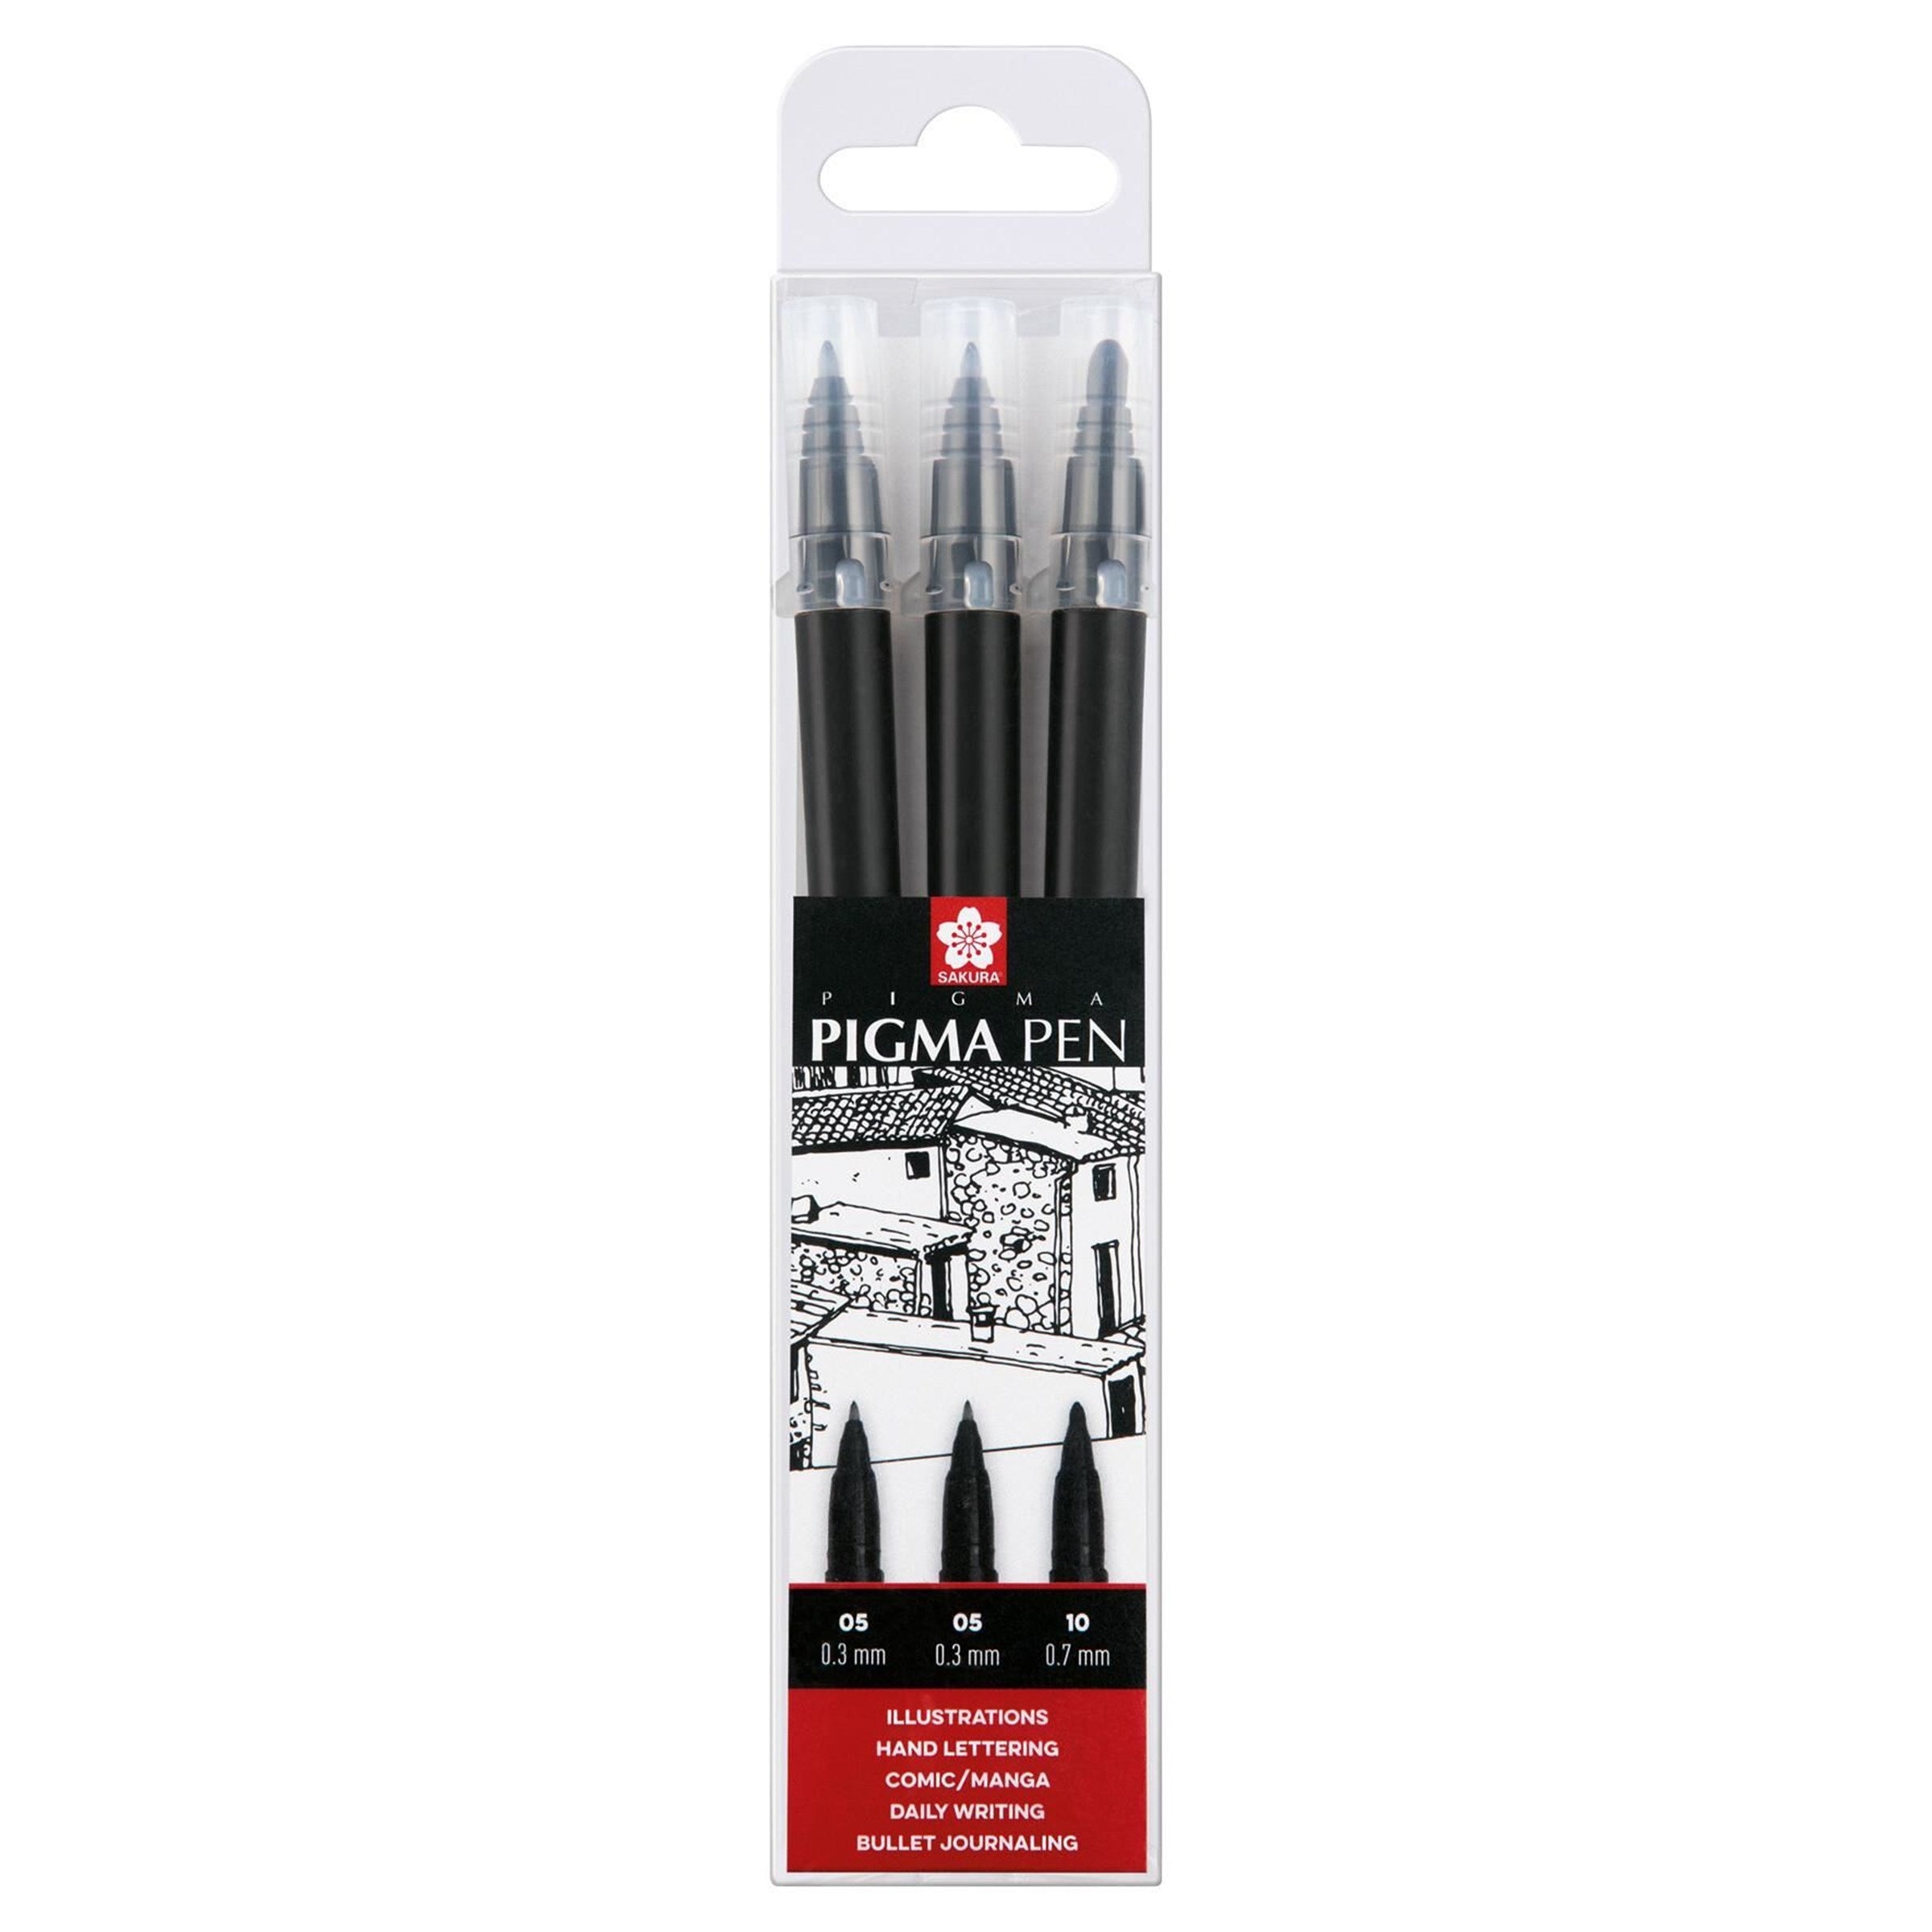 Pigma Pen set | 3 sizes, black